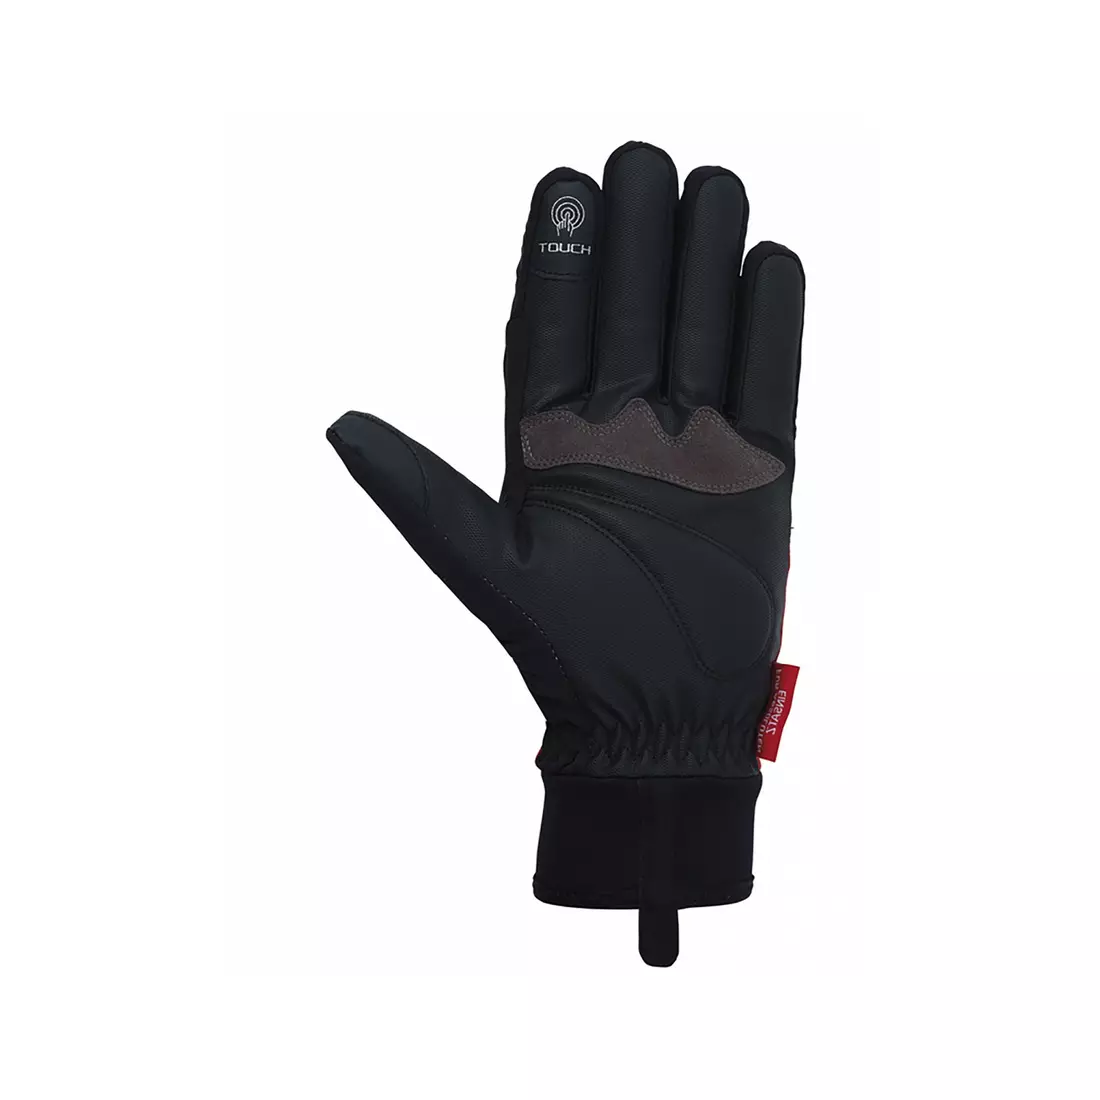 CHIBA RAIN PRO winter cycling glove, black 31227